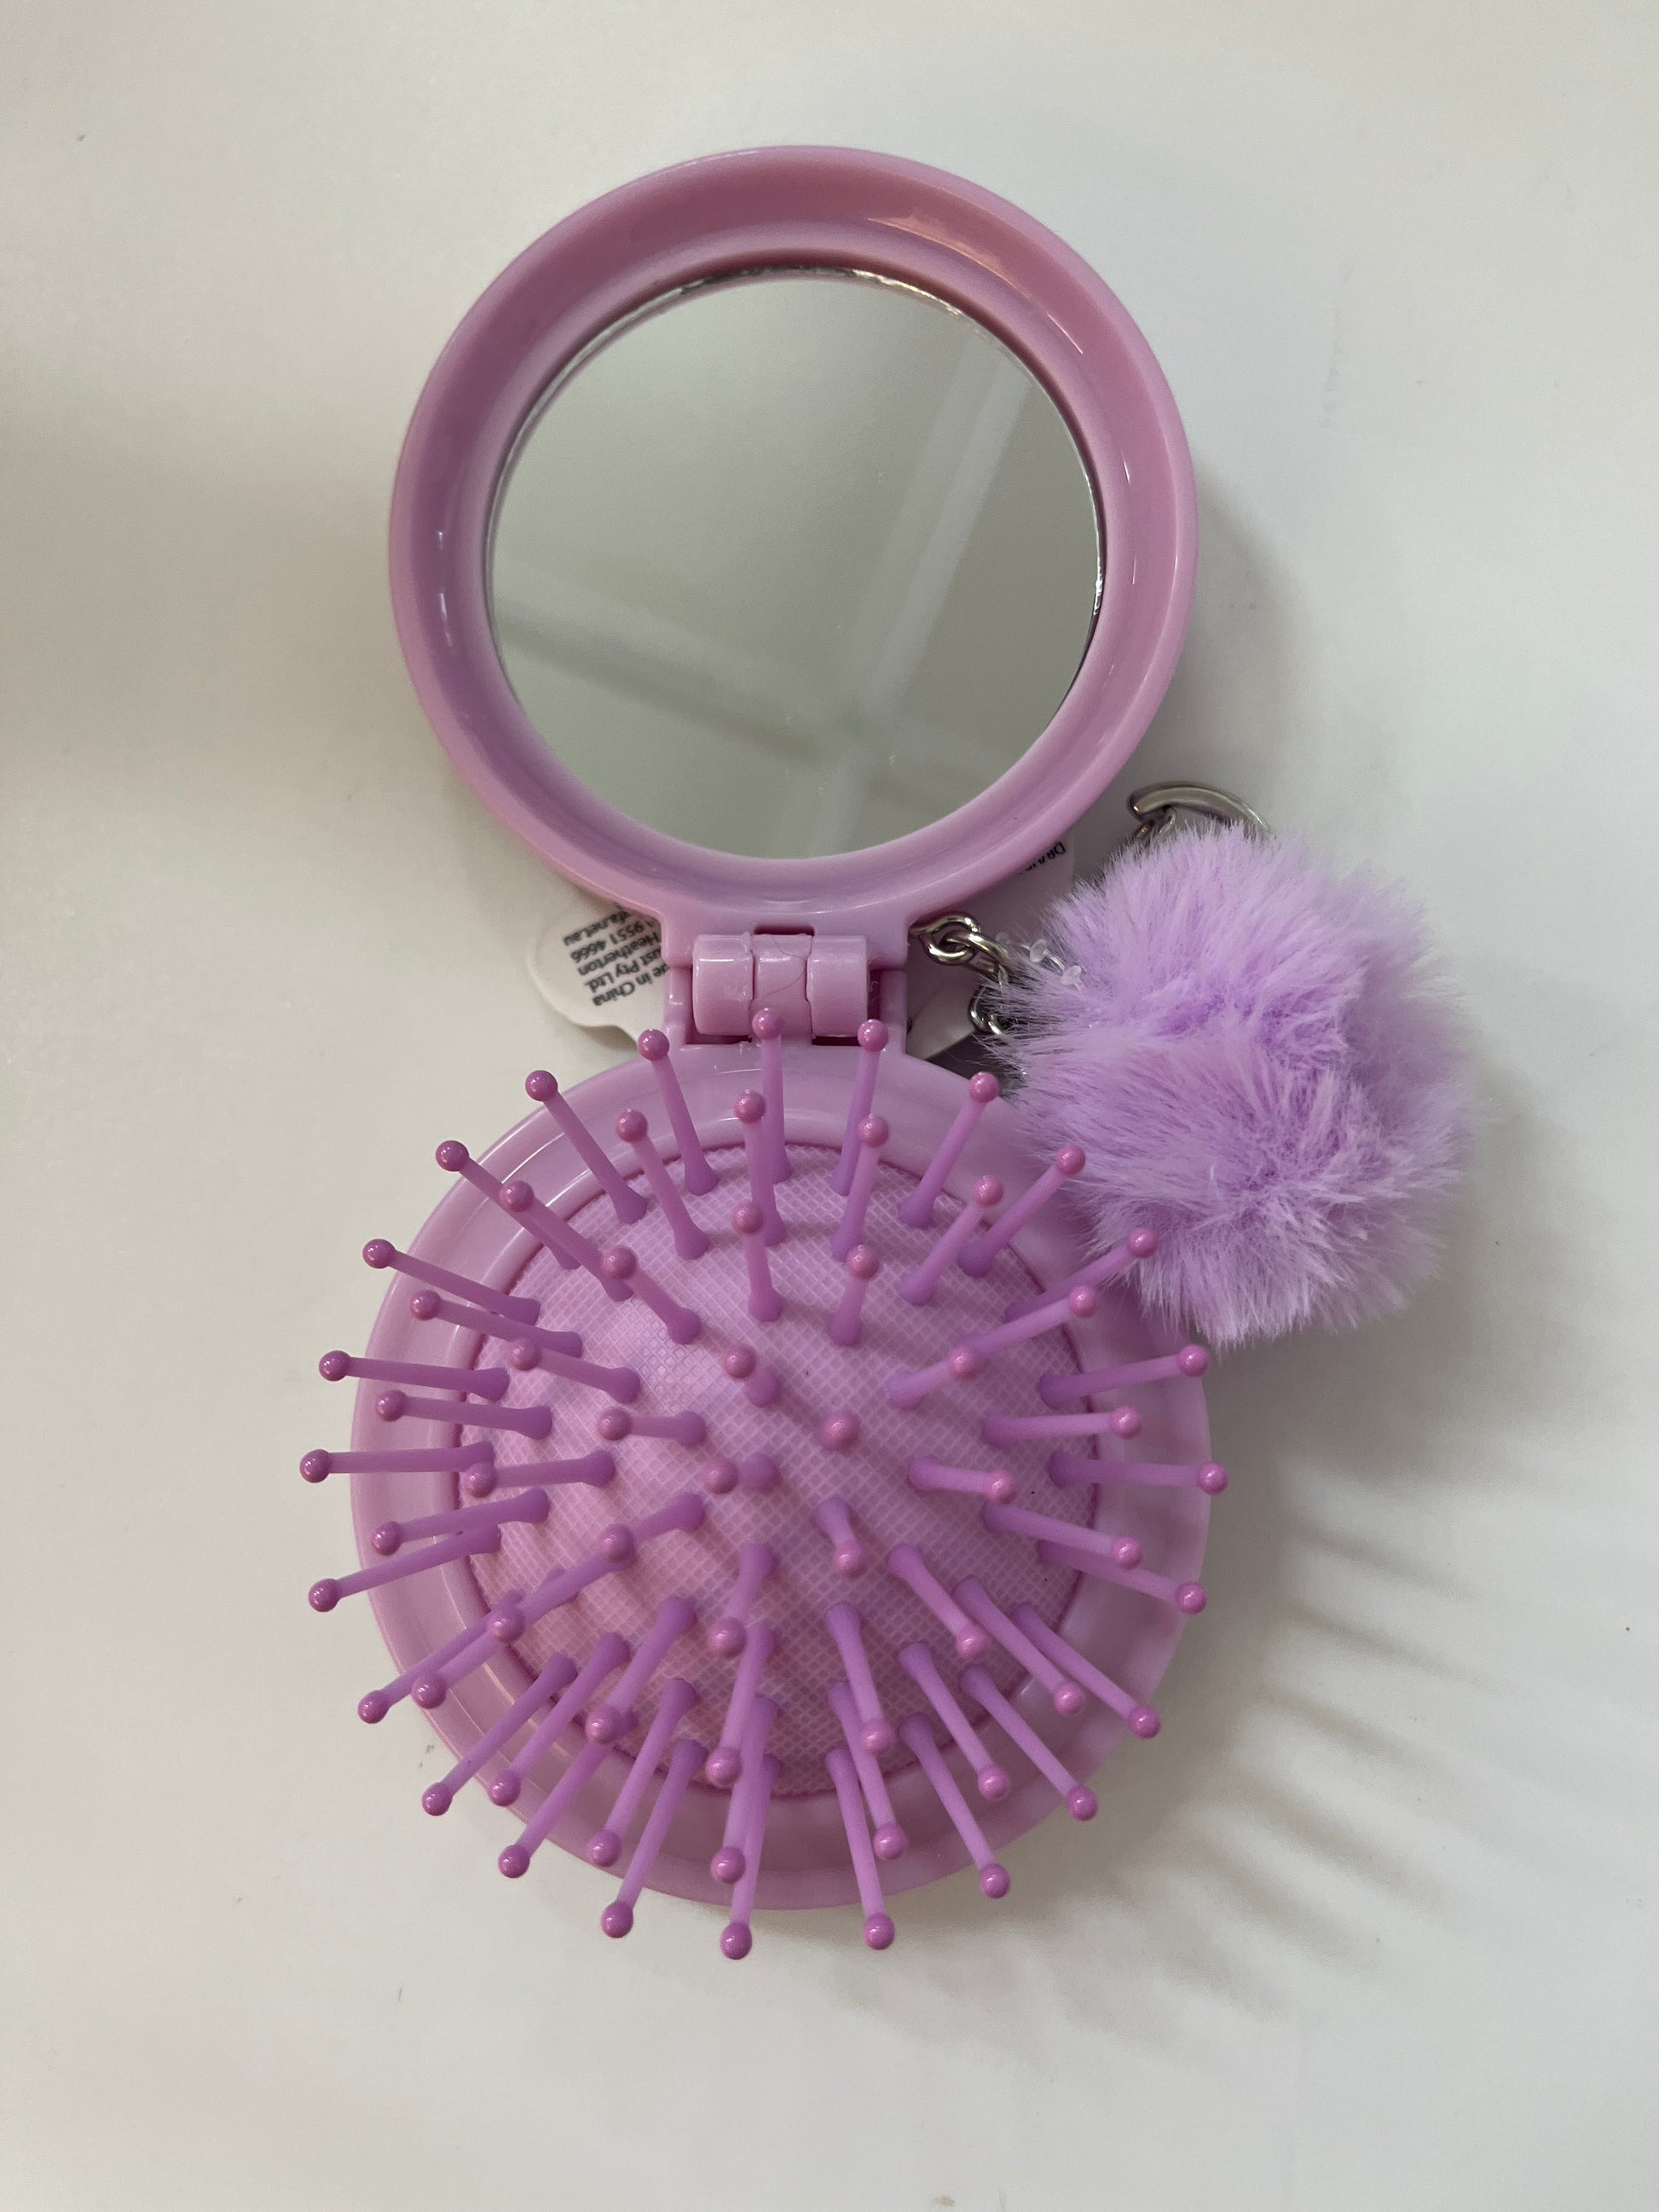 purple hairbrush and compact